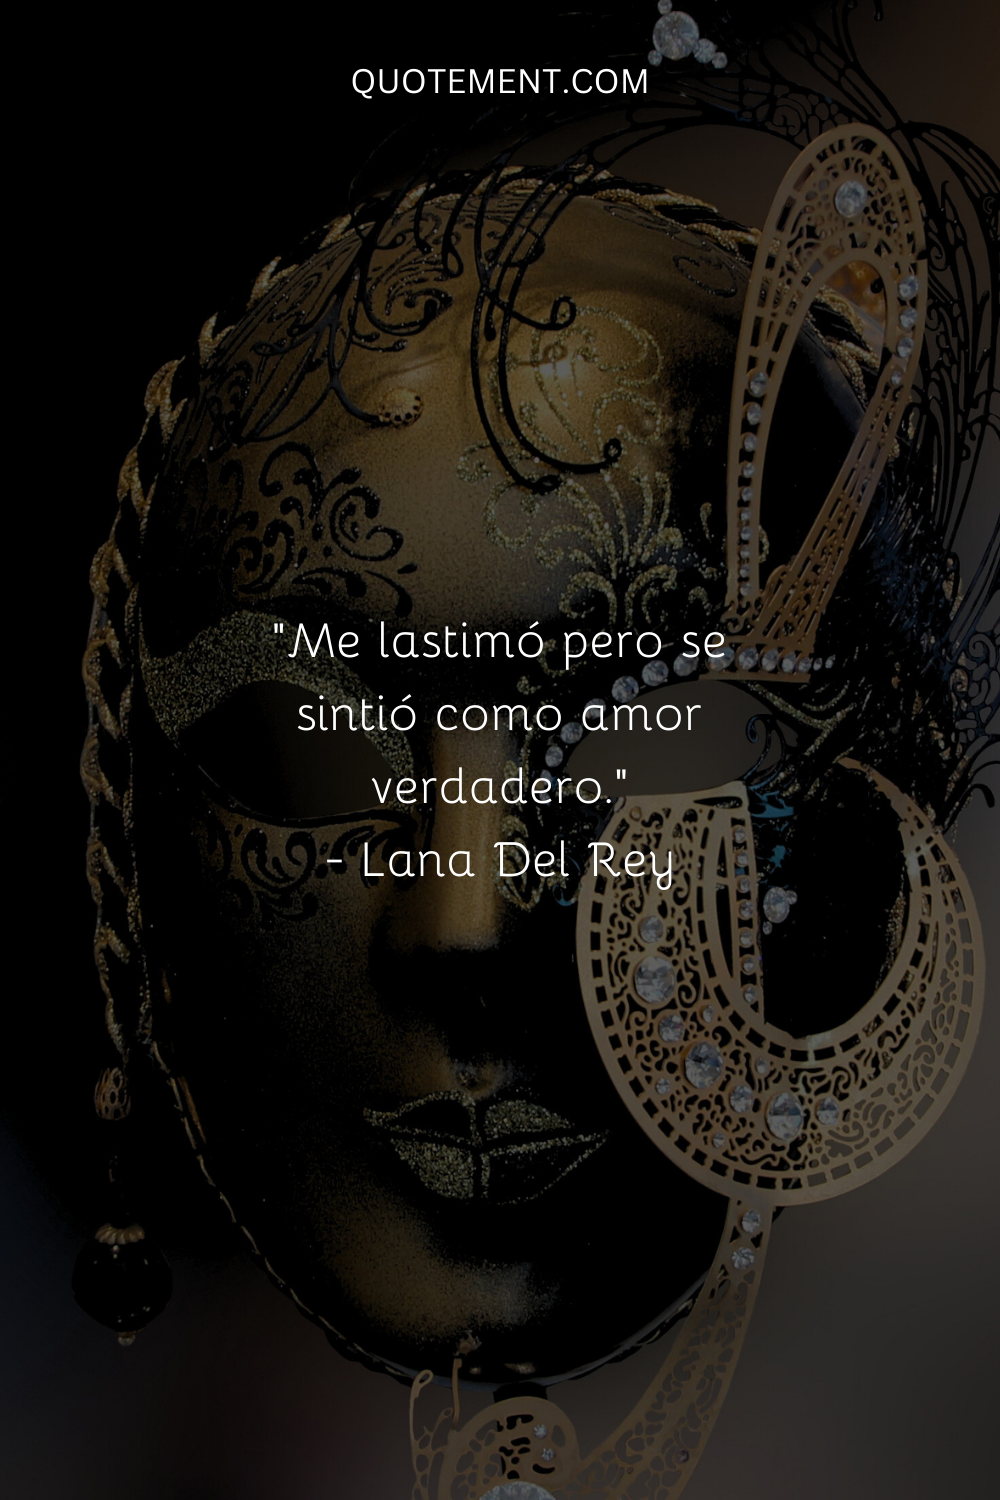 "Me hizo daño pero lo sentí como amor verdadero". - Lana Del Rey